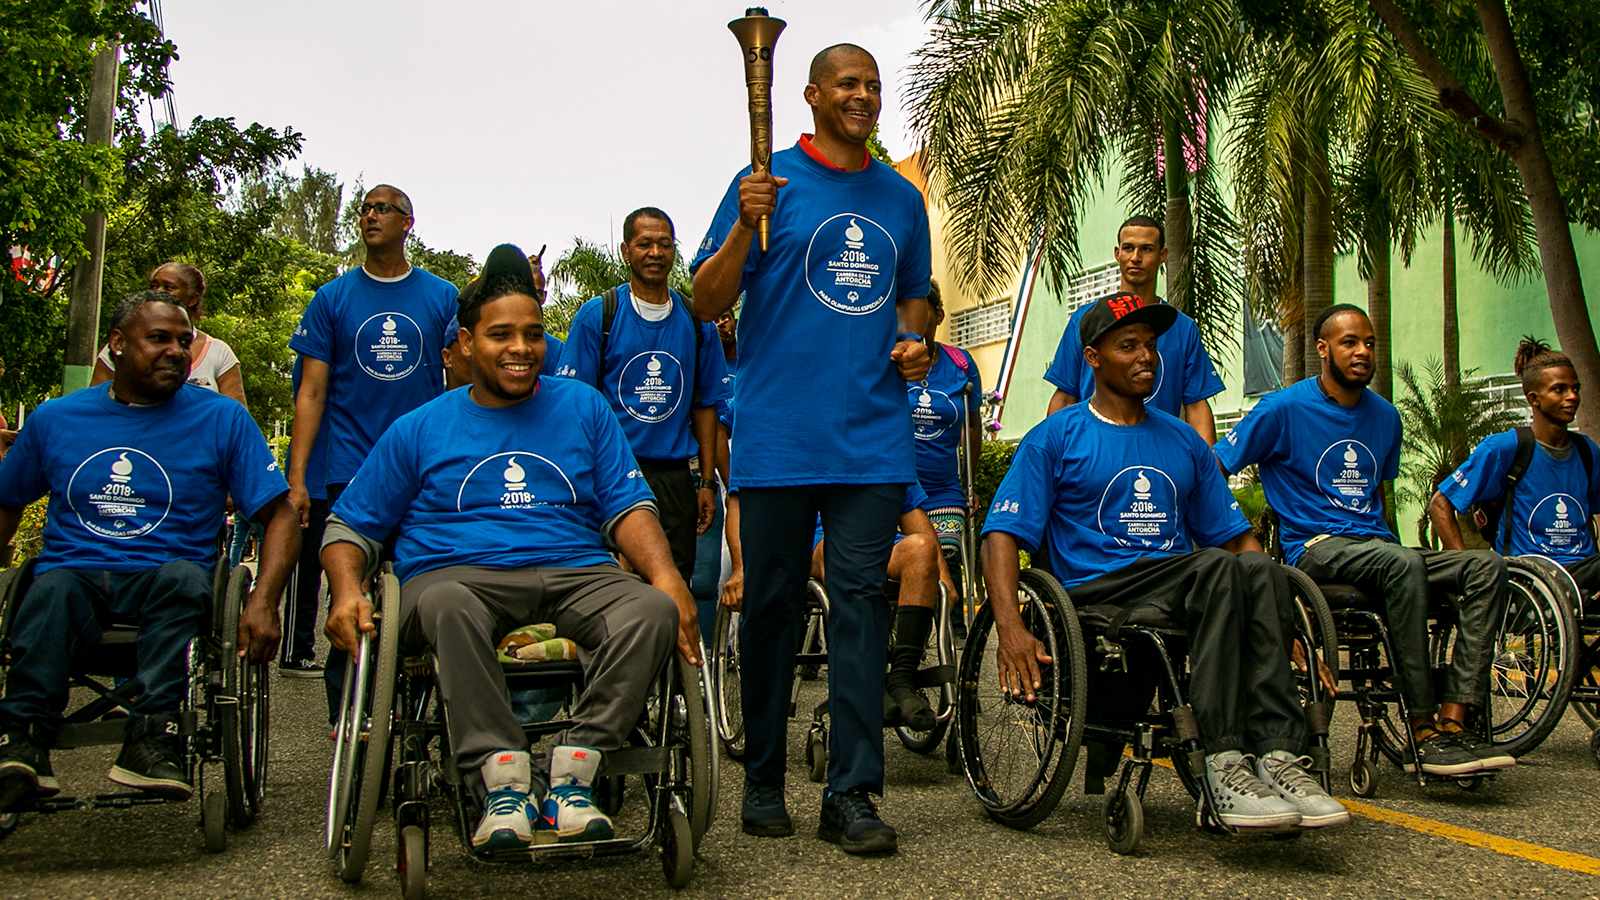 REPÚBLICA DOMINICANA: La Carrera de la Antorcha